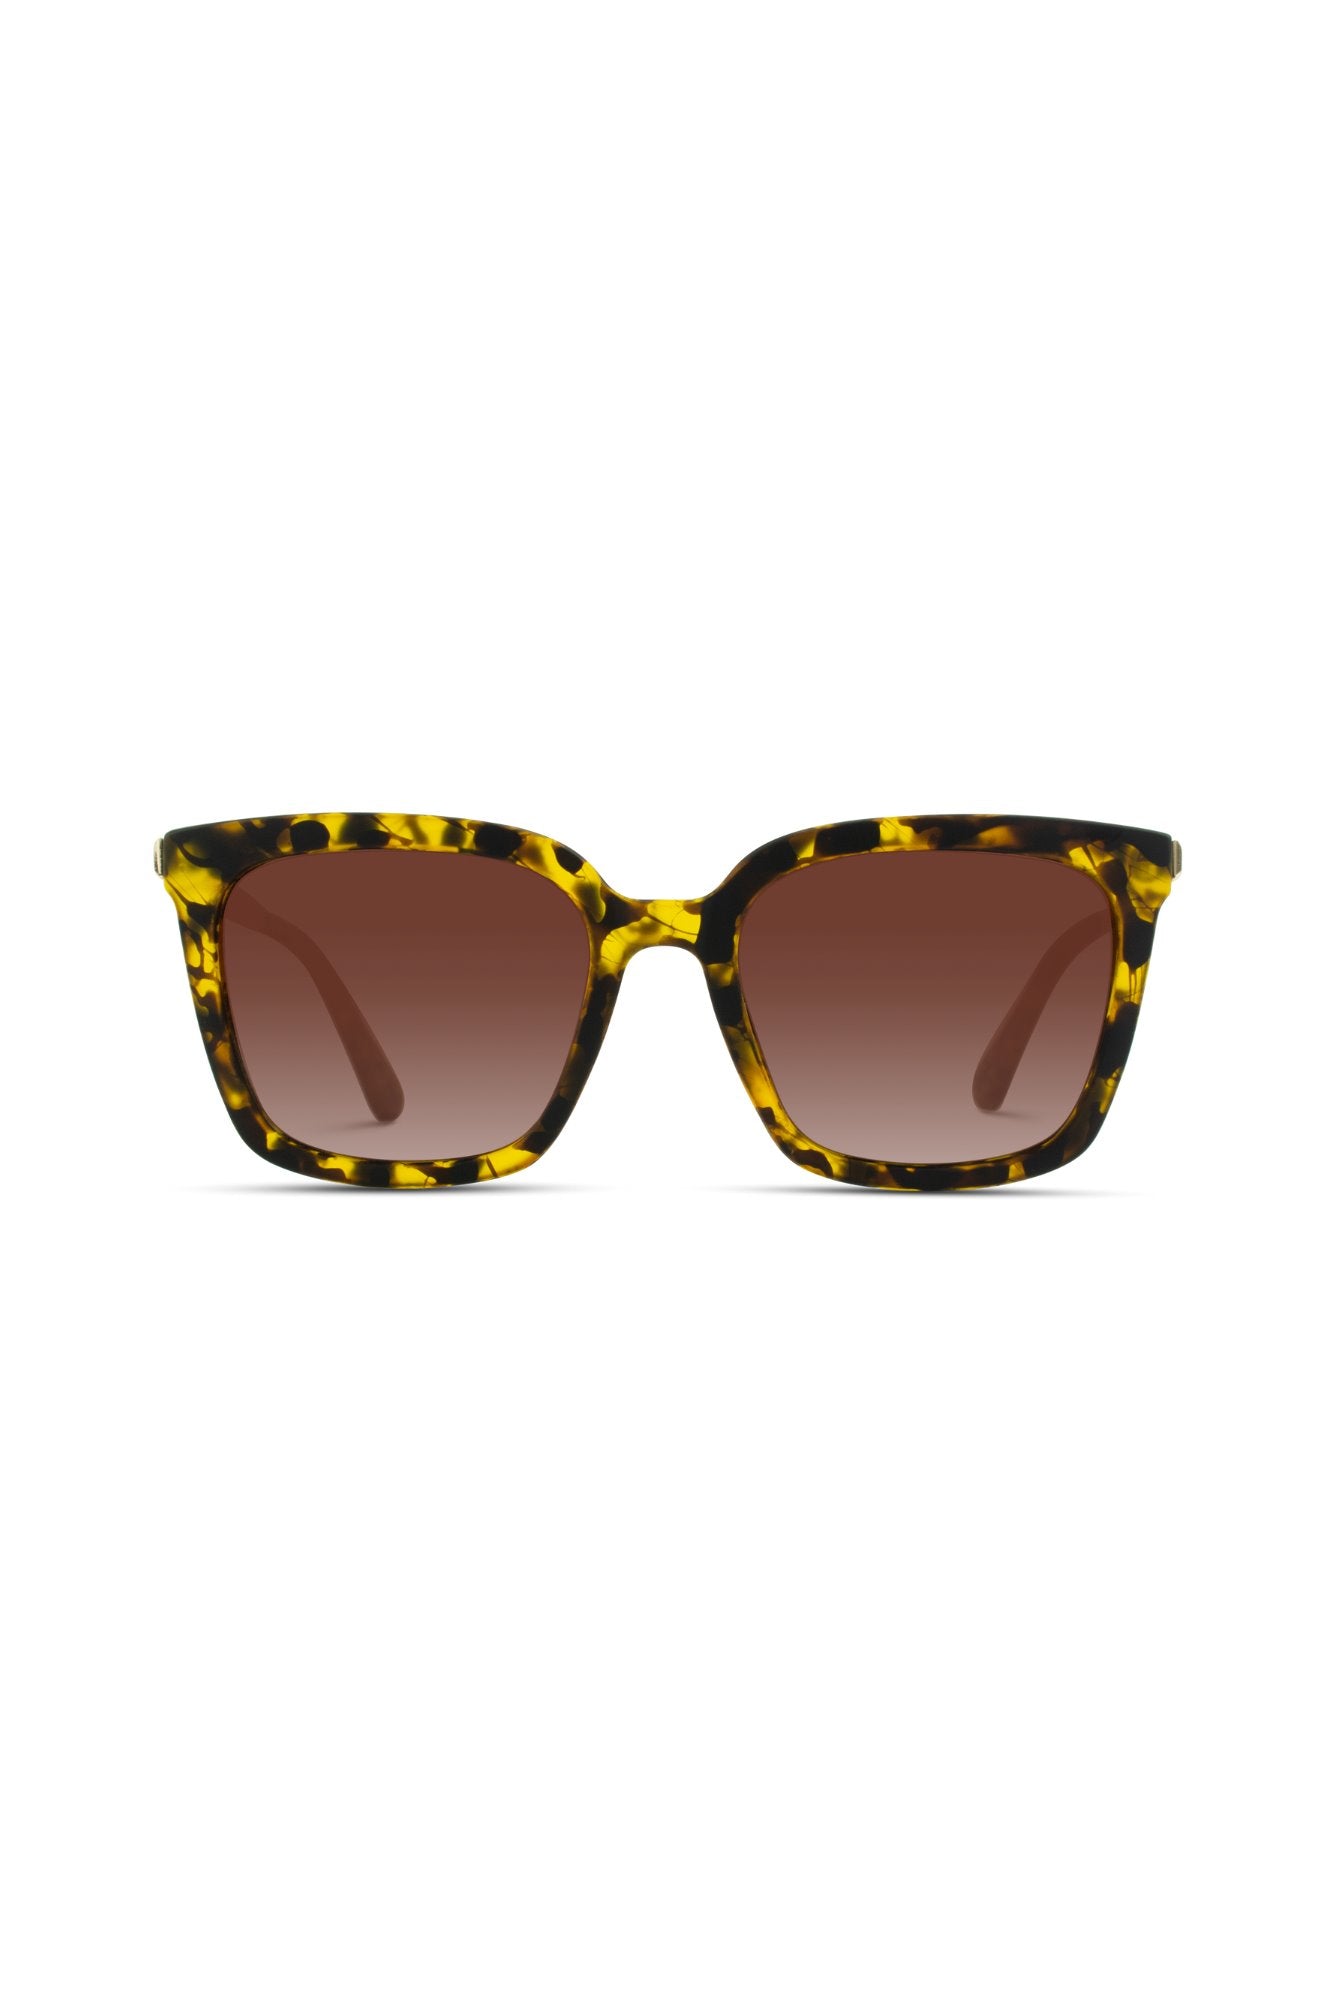 Pierce Sunglasses in Tortoise Holley Girl 